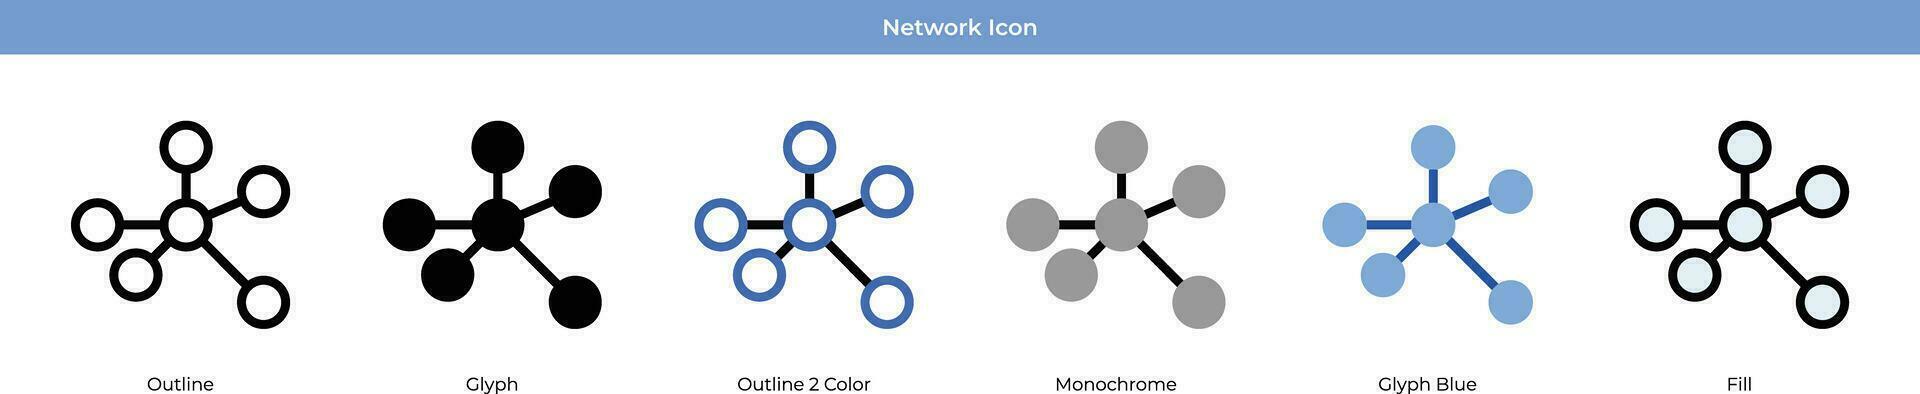 Network Icon Set vector